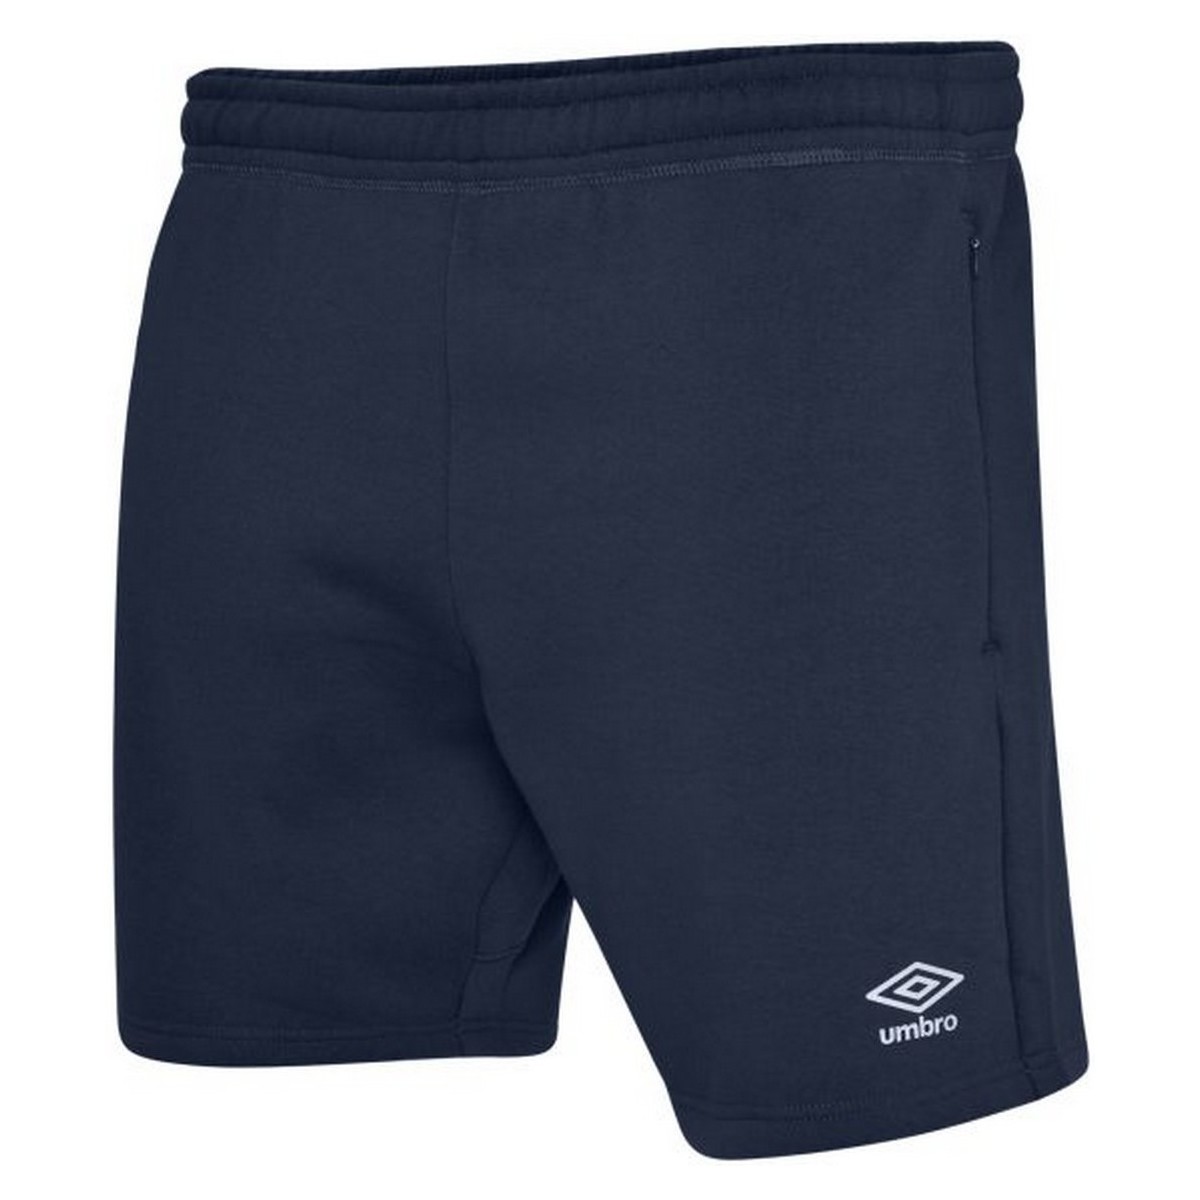 textil Niños Shorts / Bermudas Umbro Club Leisure Blanco